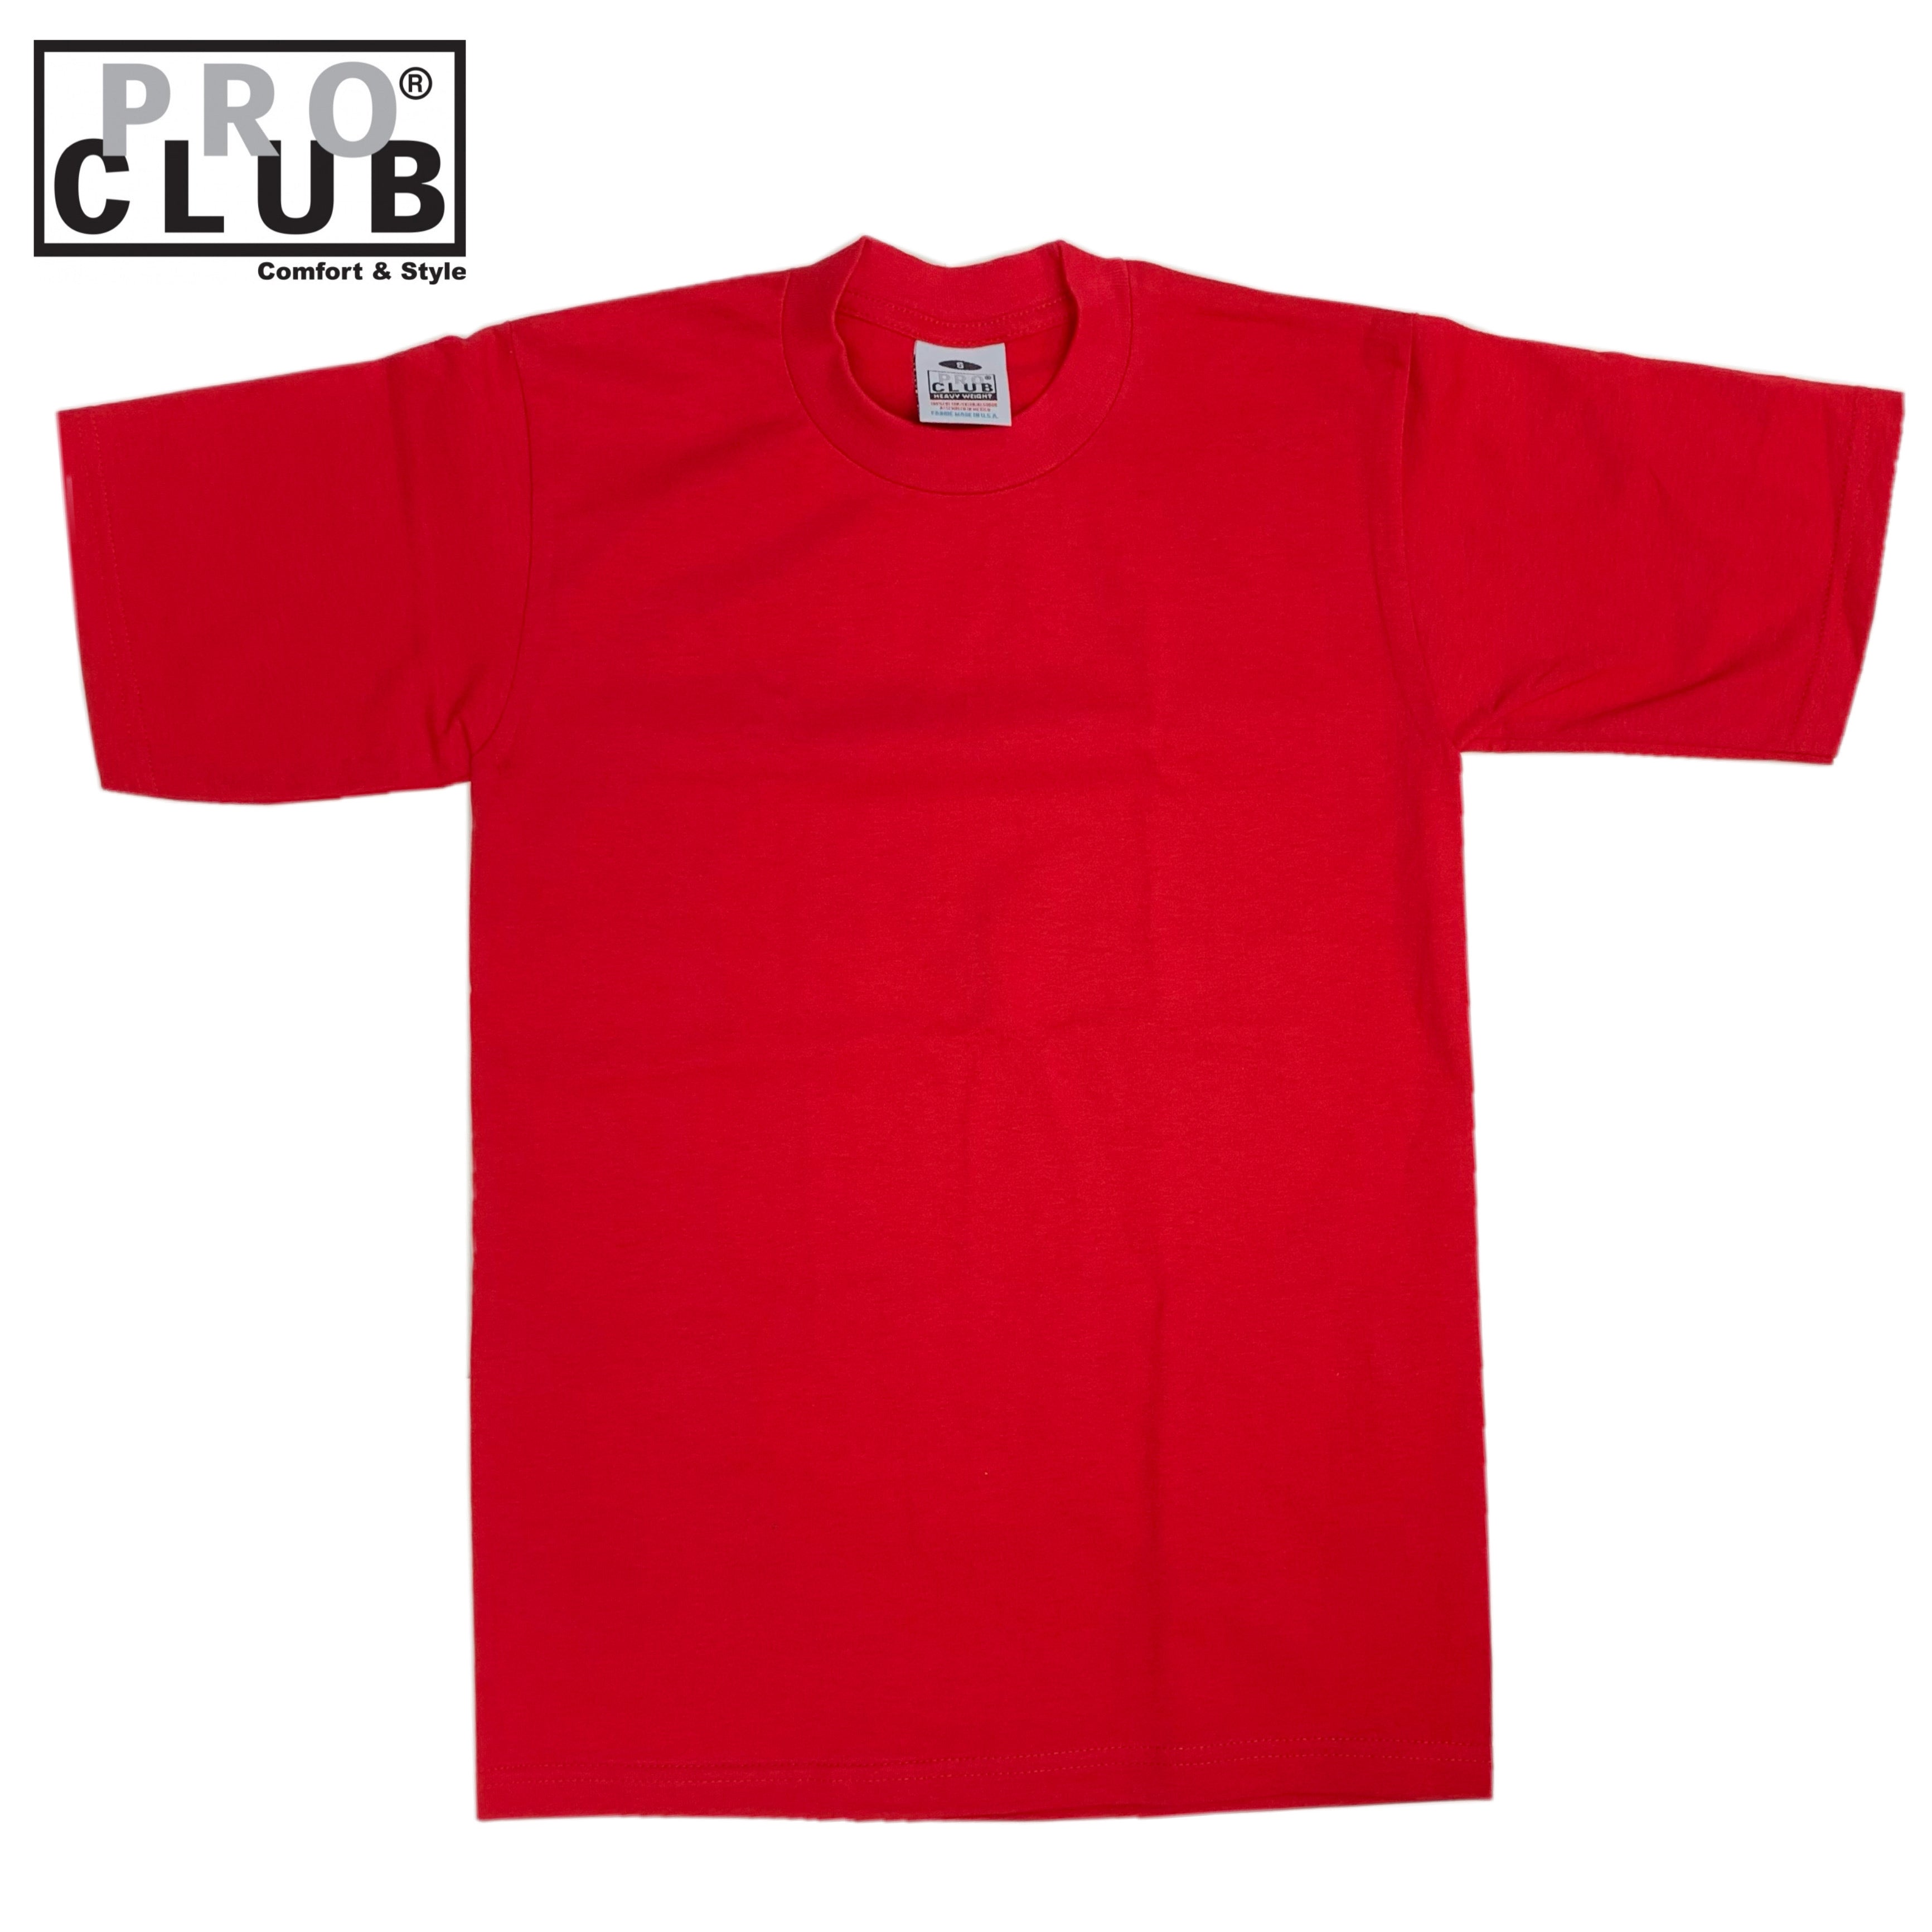 Lot 2 PRO CLUB A SHIRTS TANK TOP RED ProClub Men's Wife Beater Undershirts  S-7XL 